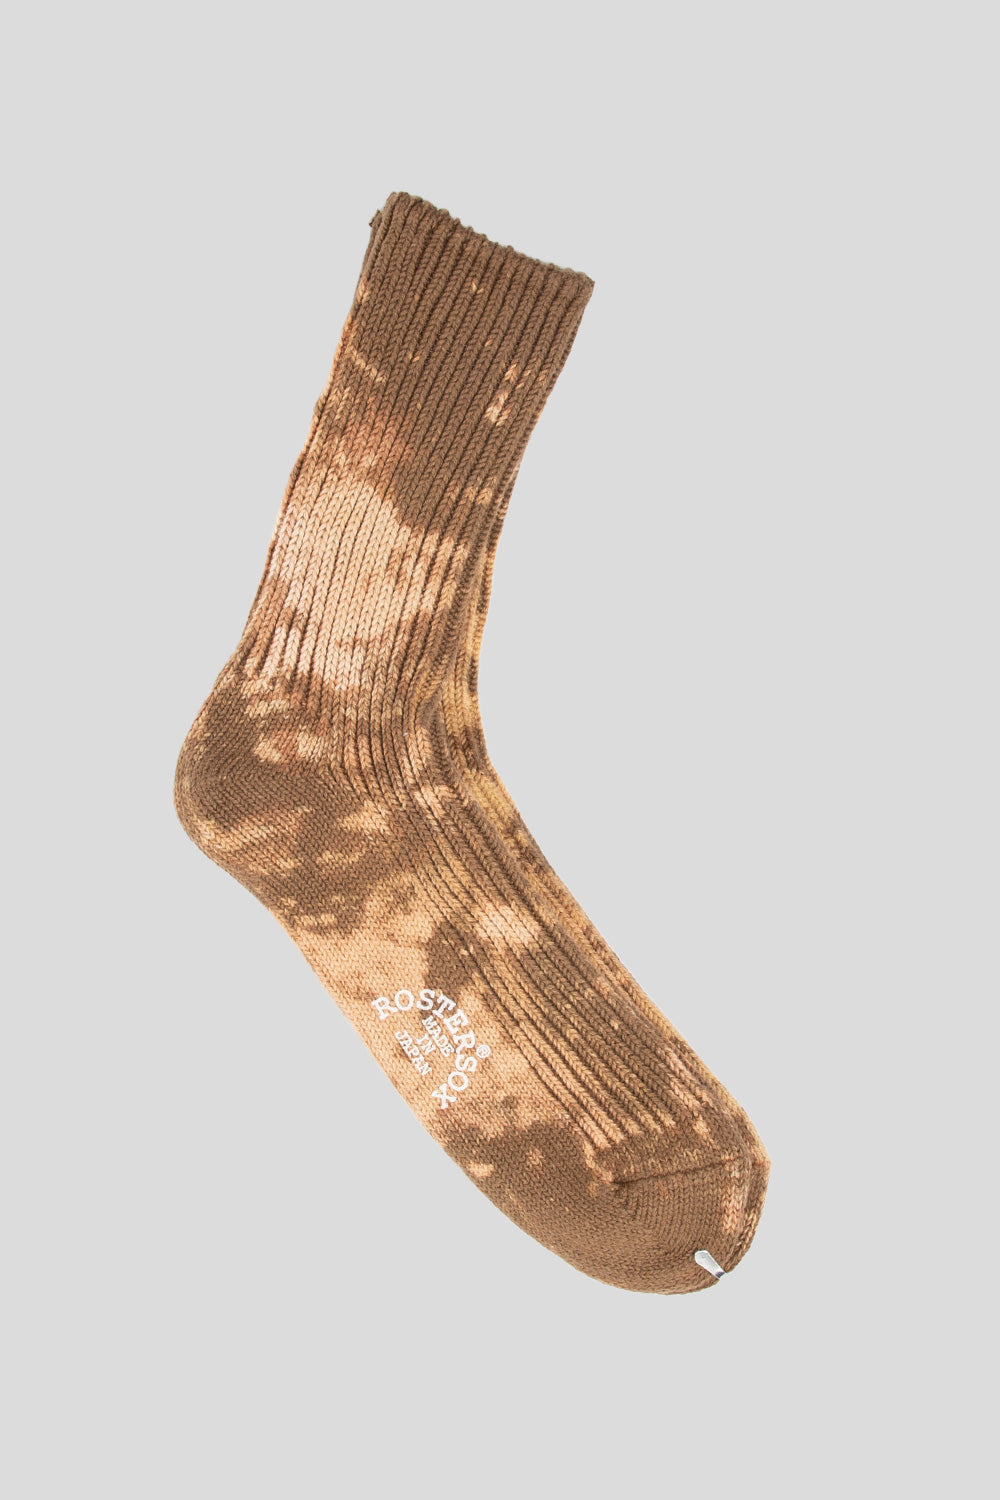 Rostersox Sock Brown, L / Brown